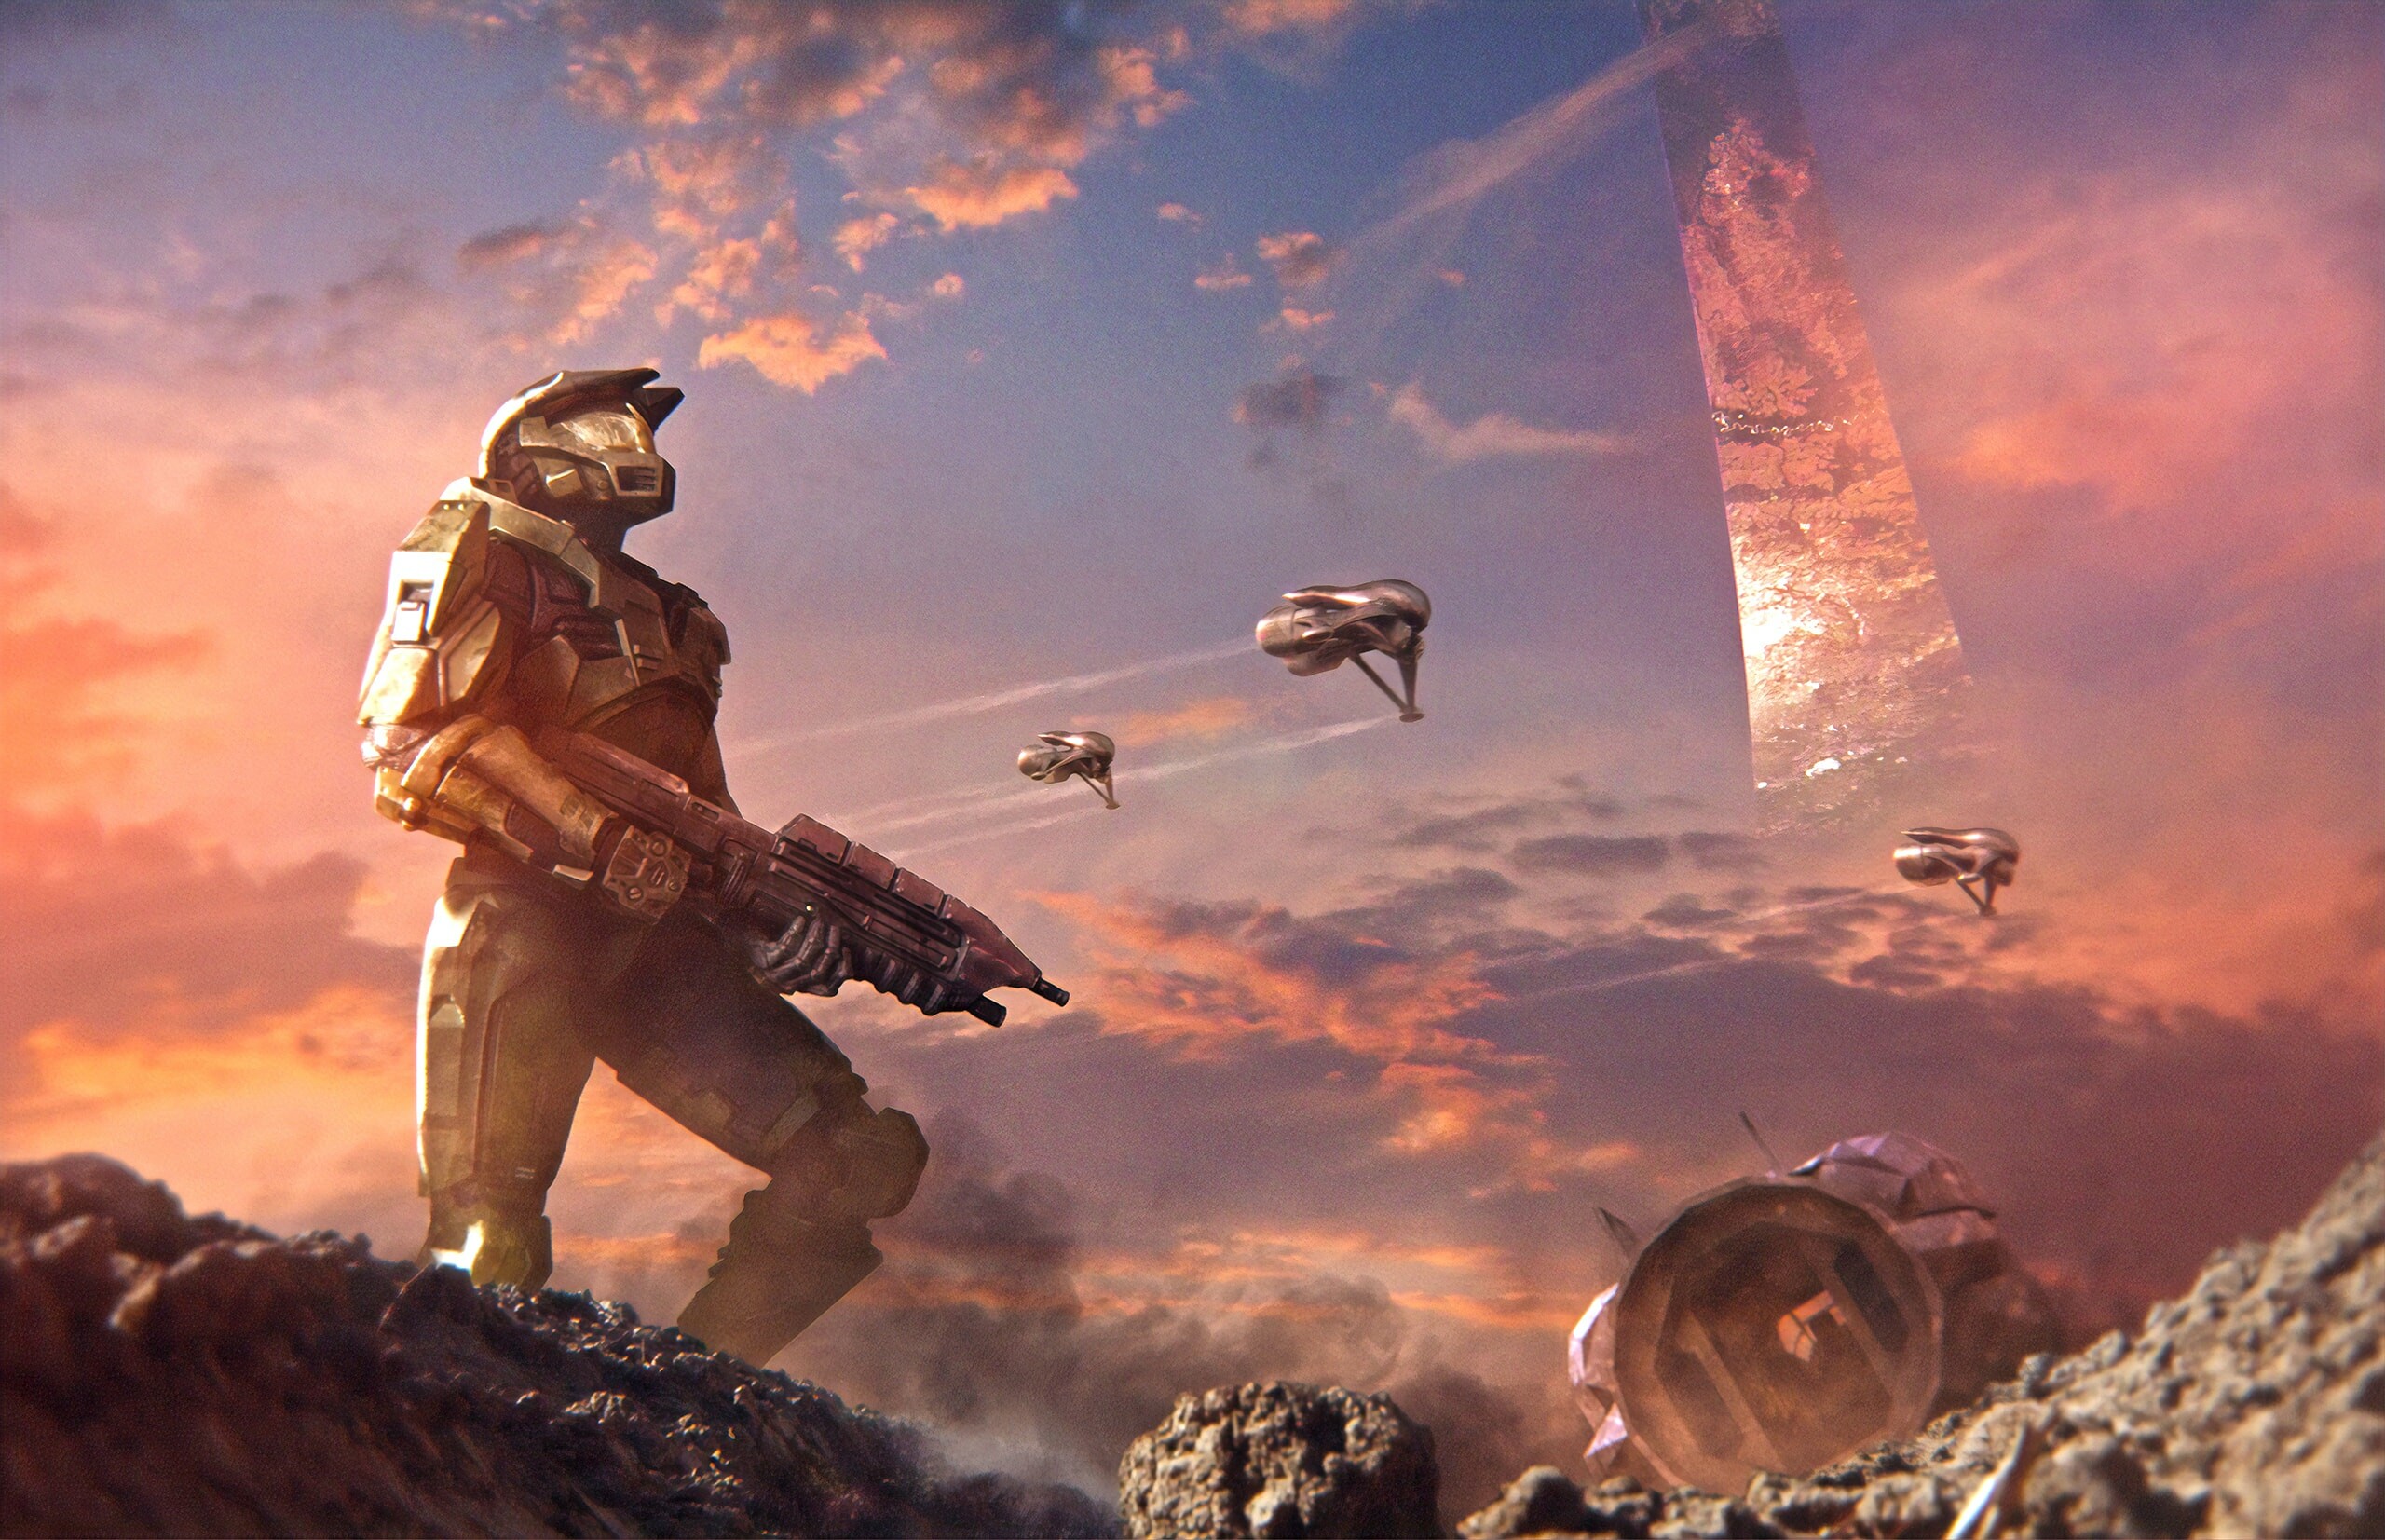 Halo, Gaming wallpaper, Epic battles, Sci-fi adventure, 2560x1660 HD Desktop